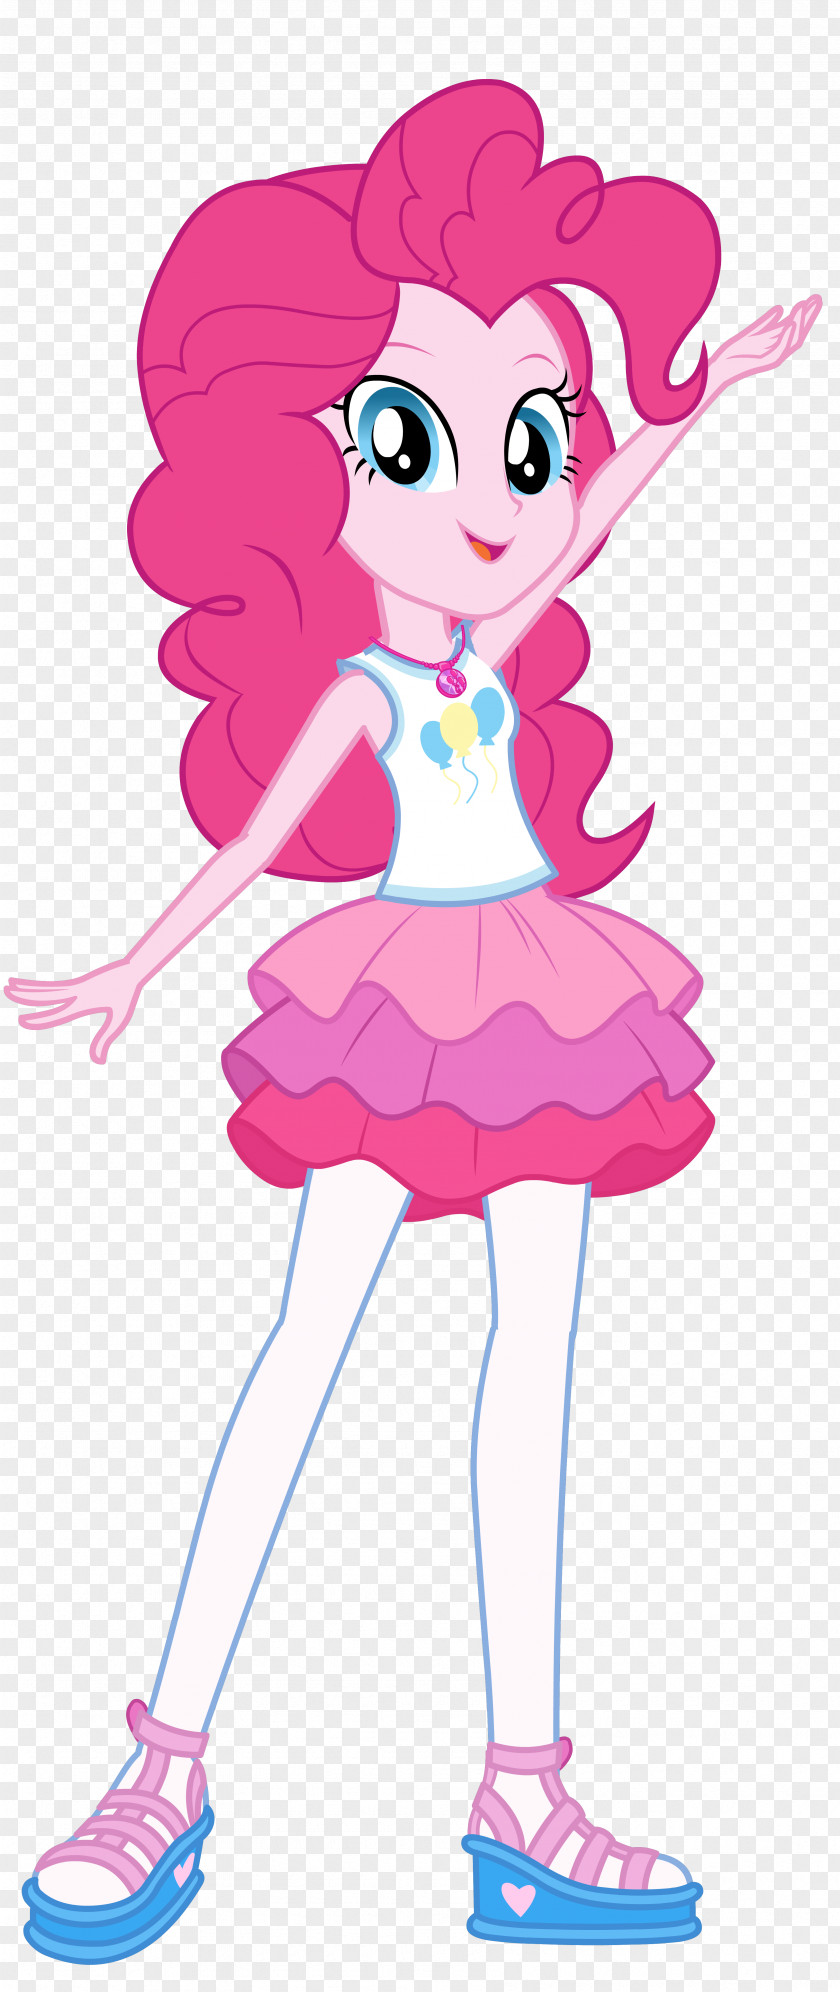 Character Sketch Pinkie Pie Applejack Rainbow Dash Rarity My Little Pony: Equestria Girls PNG